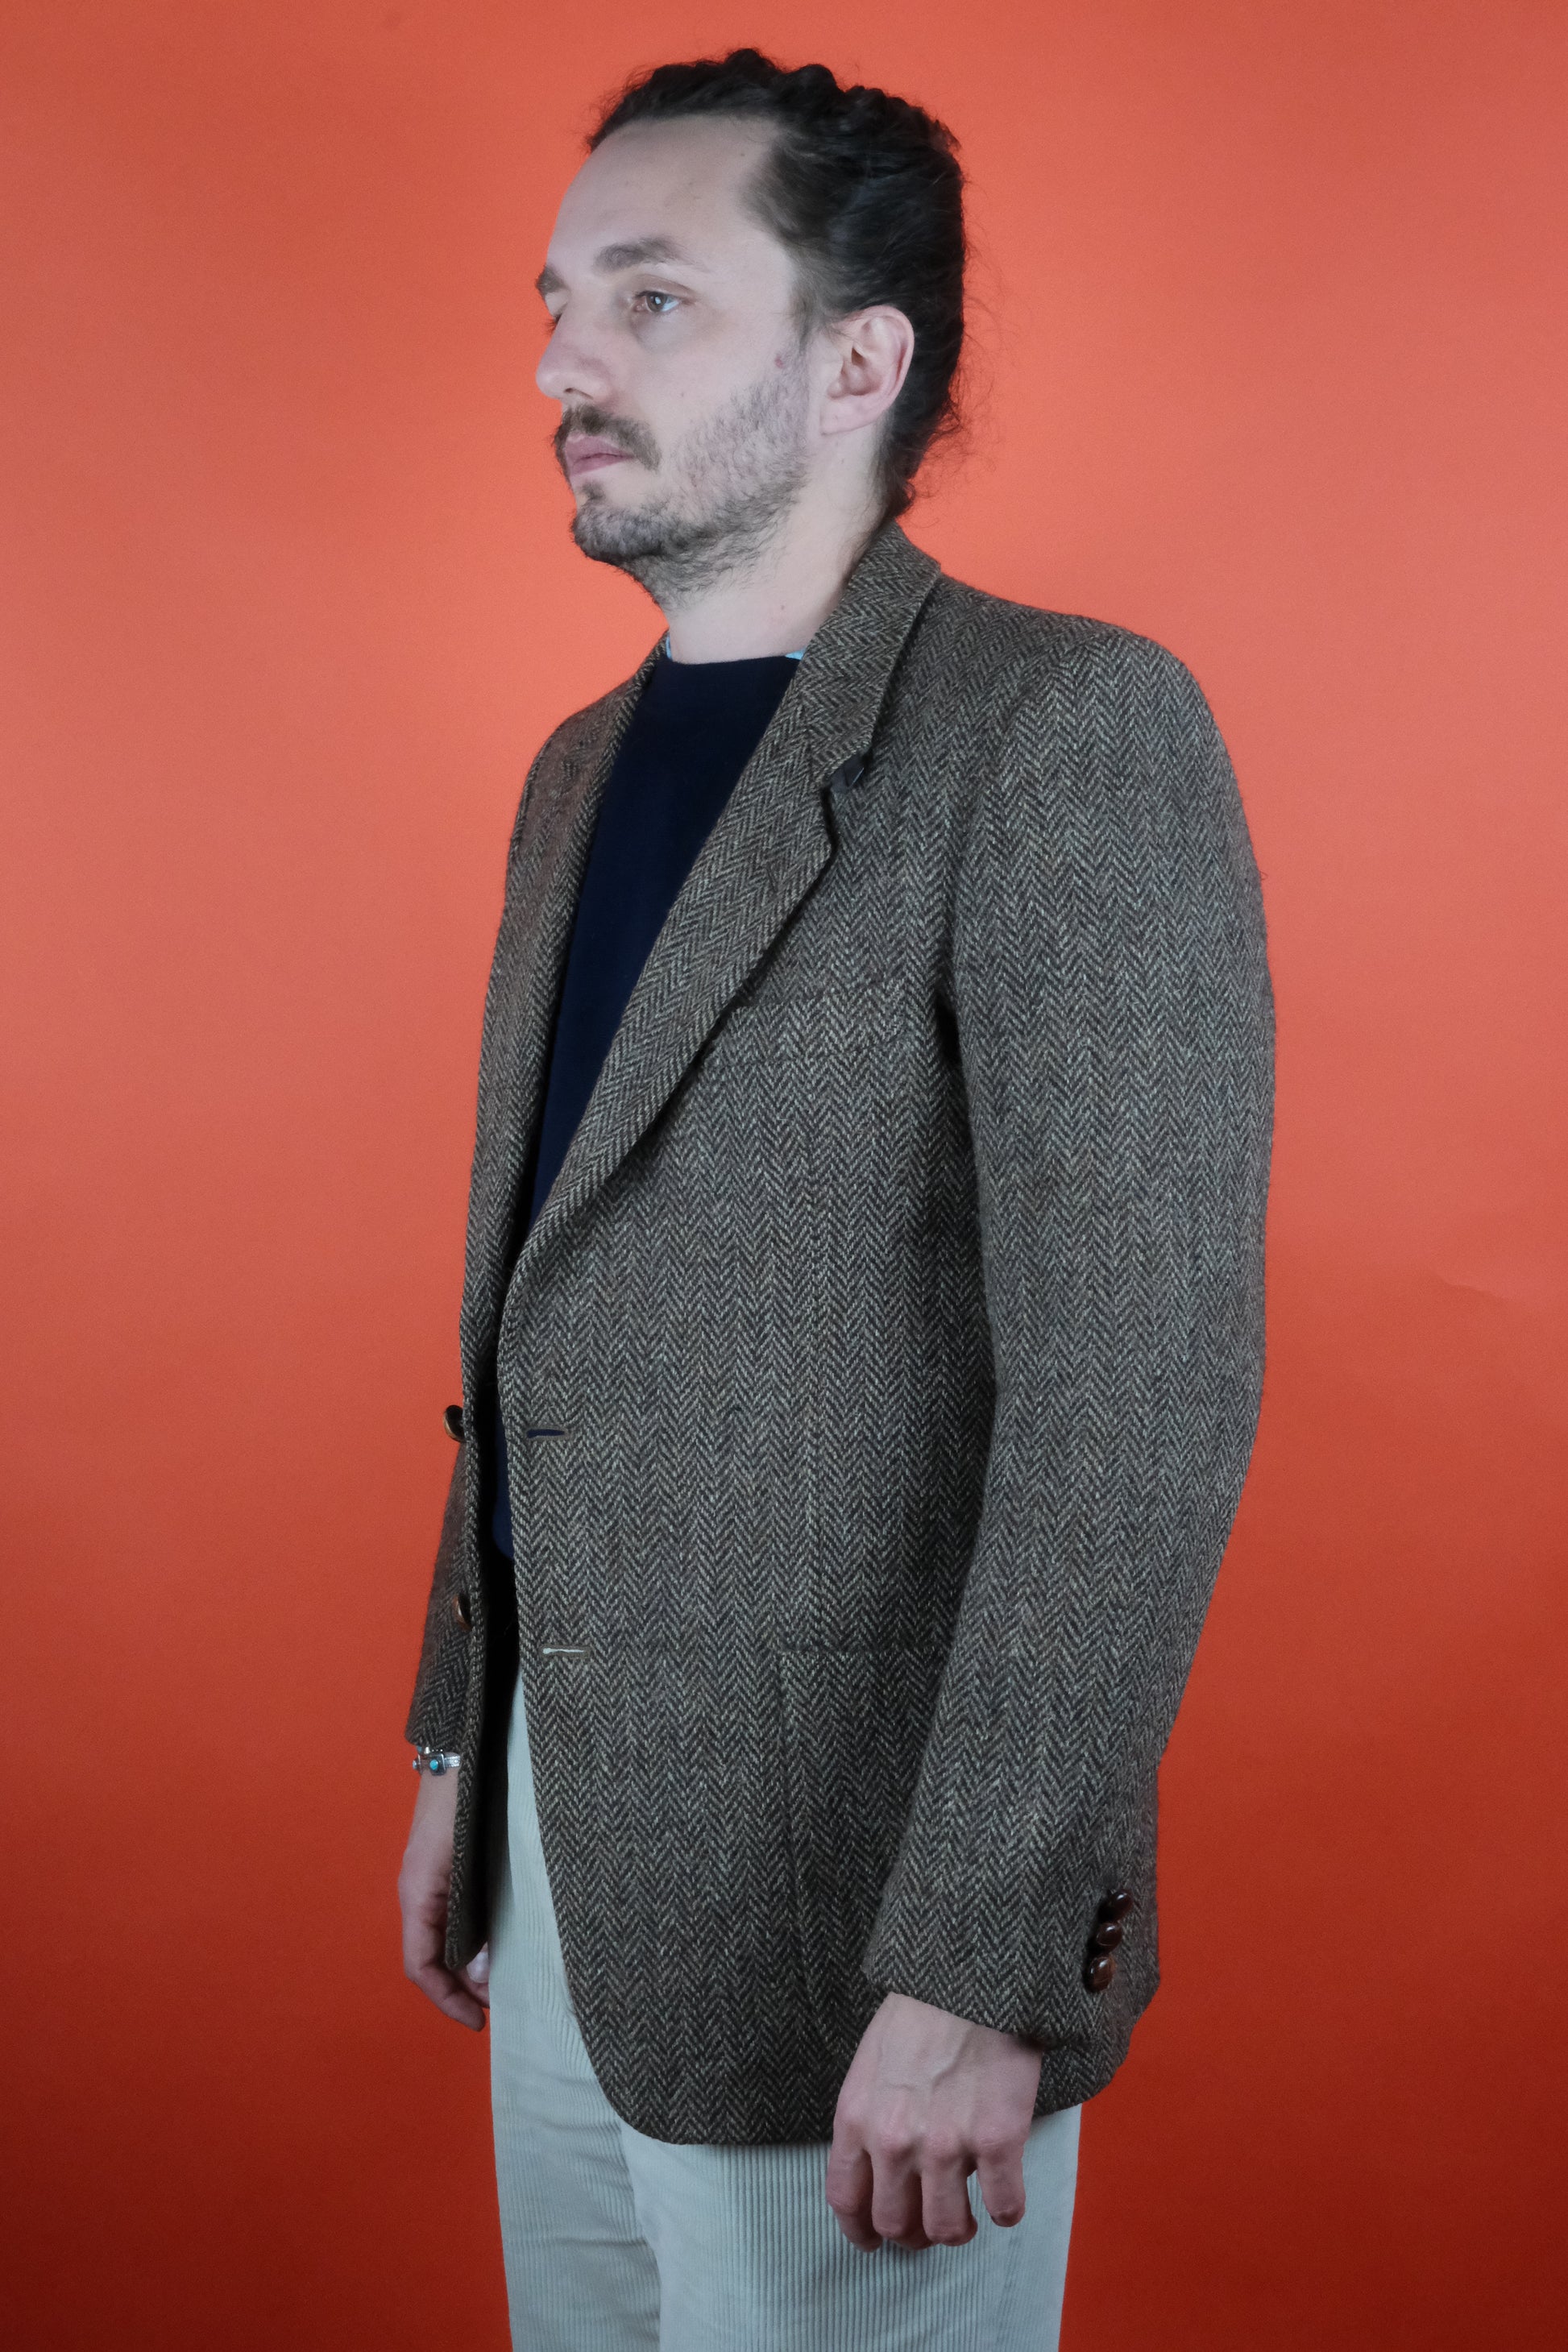 Harris Tweed Wool Suit Jacket '50' - vintage clothing clochard92.com